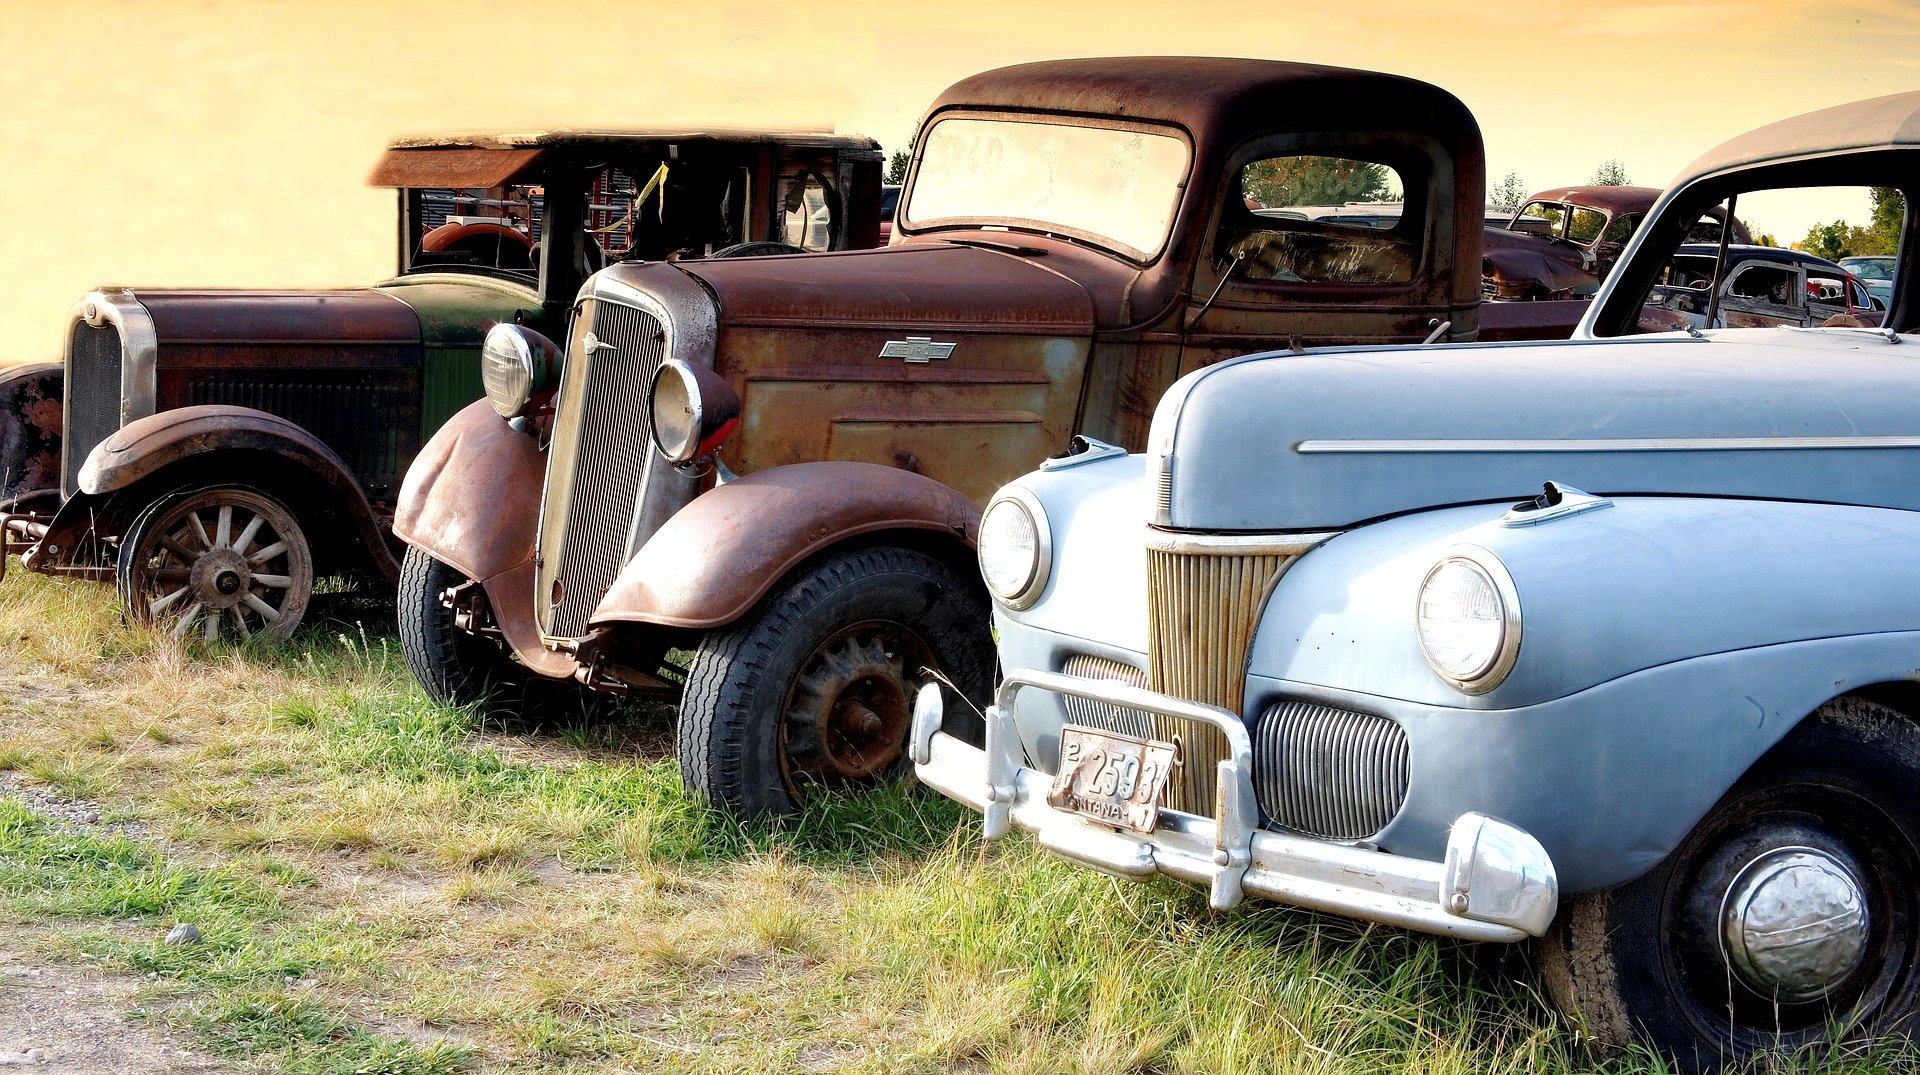 Oldtimer Cars on a Yard - VeteranCarDonations.org